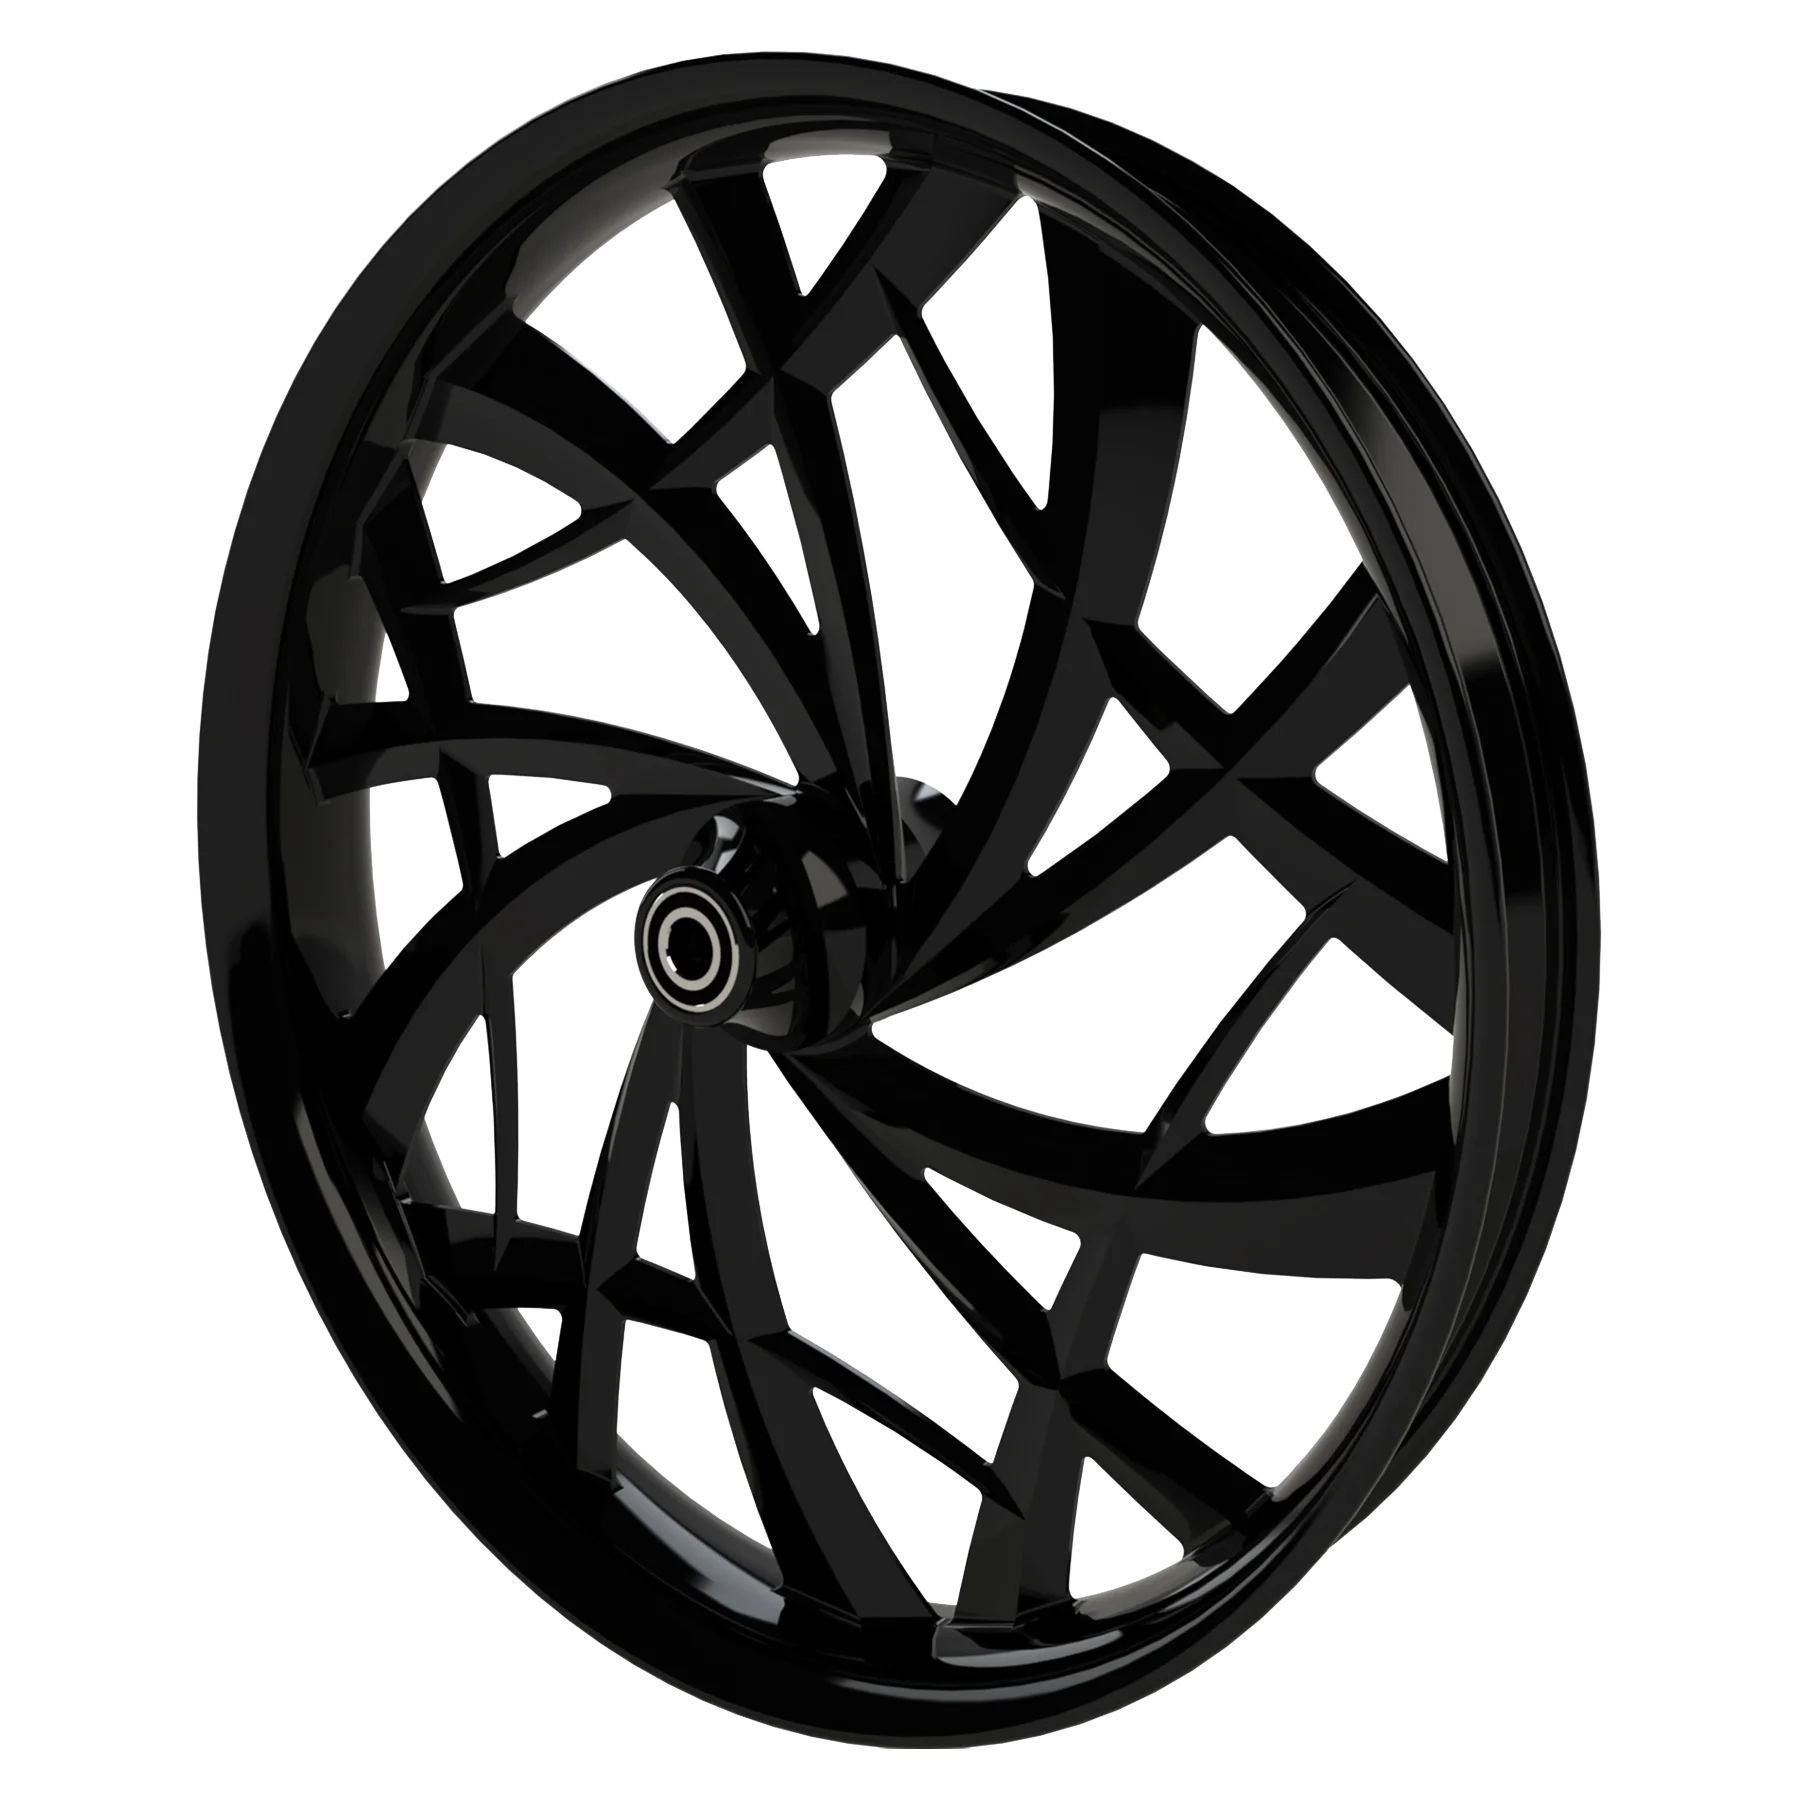 Astro custom motorycycle wheel in black